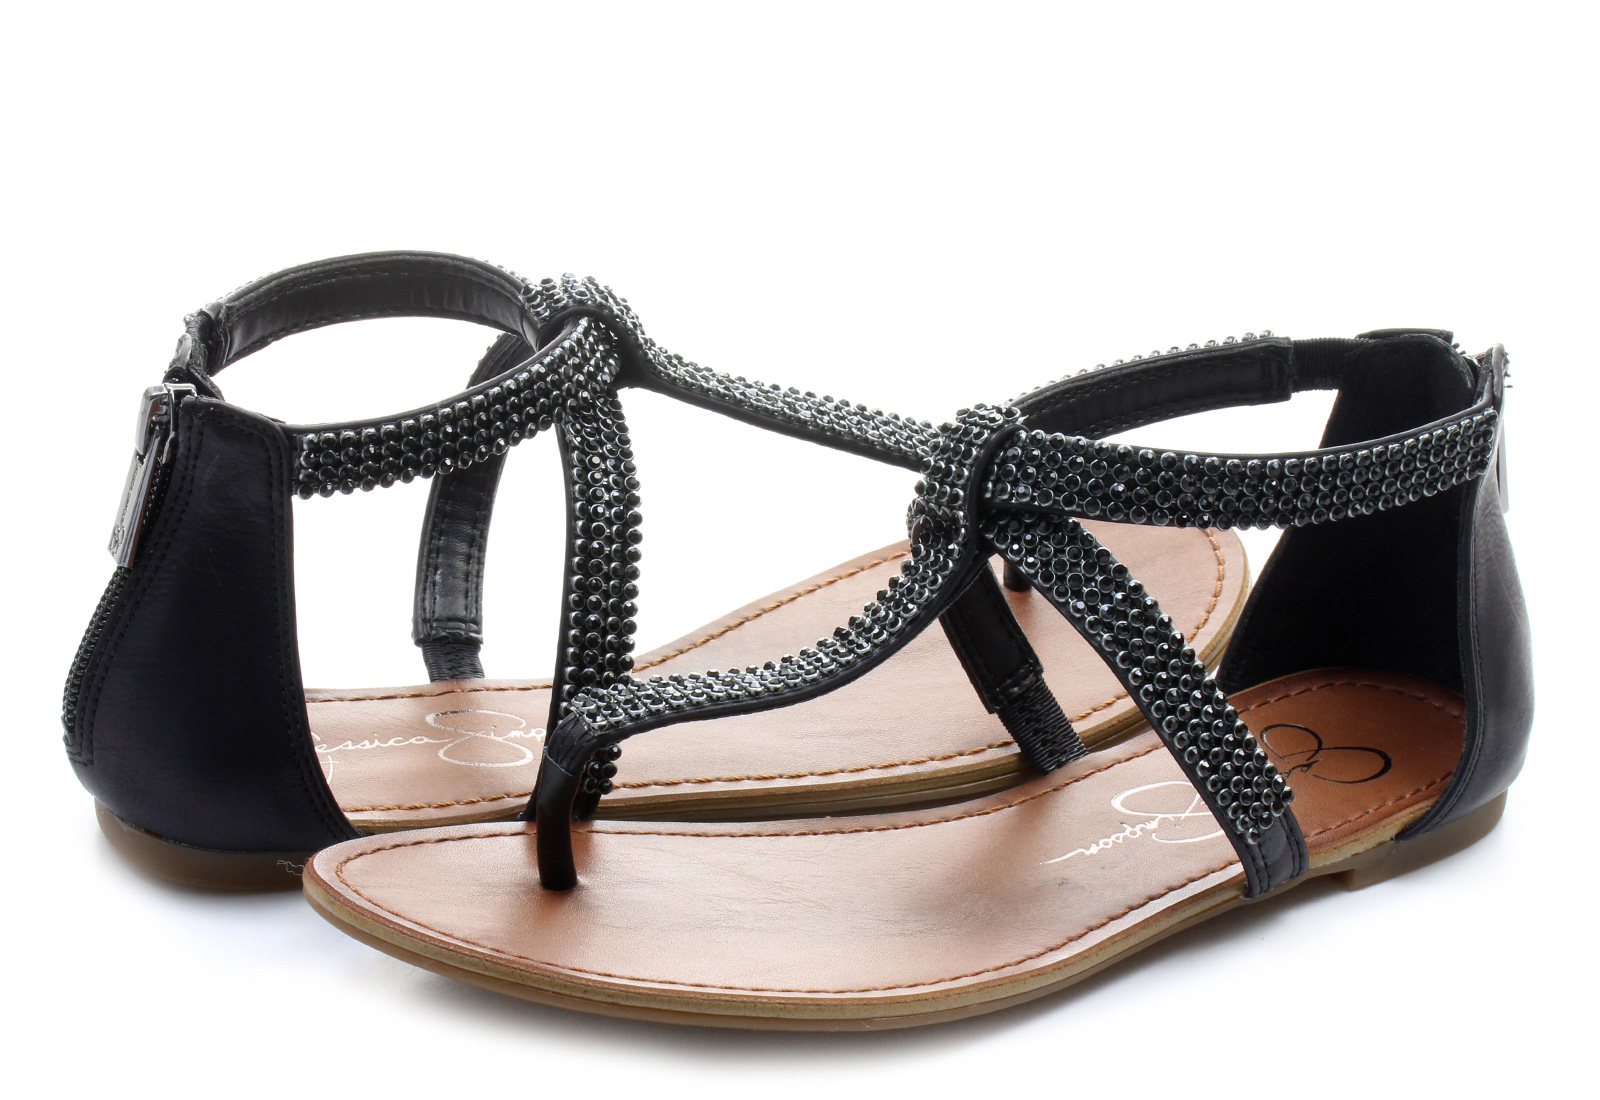 Jessica Simpson Sandals - Garreth Black - garreth-blk - Online shop for sneakers ...1600 x 1100